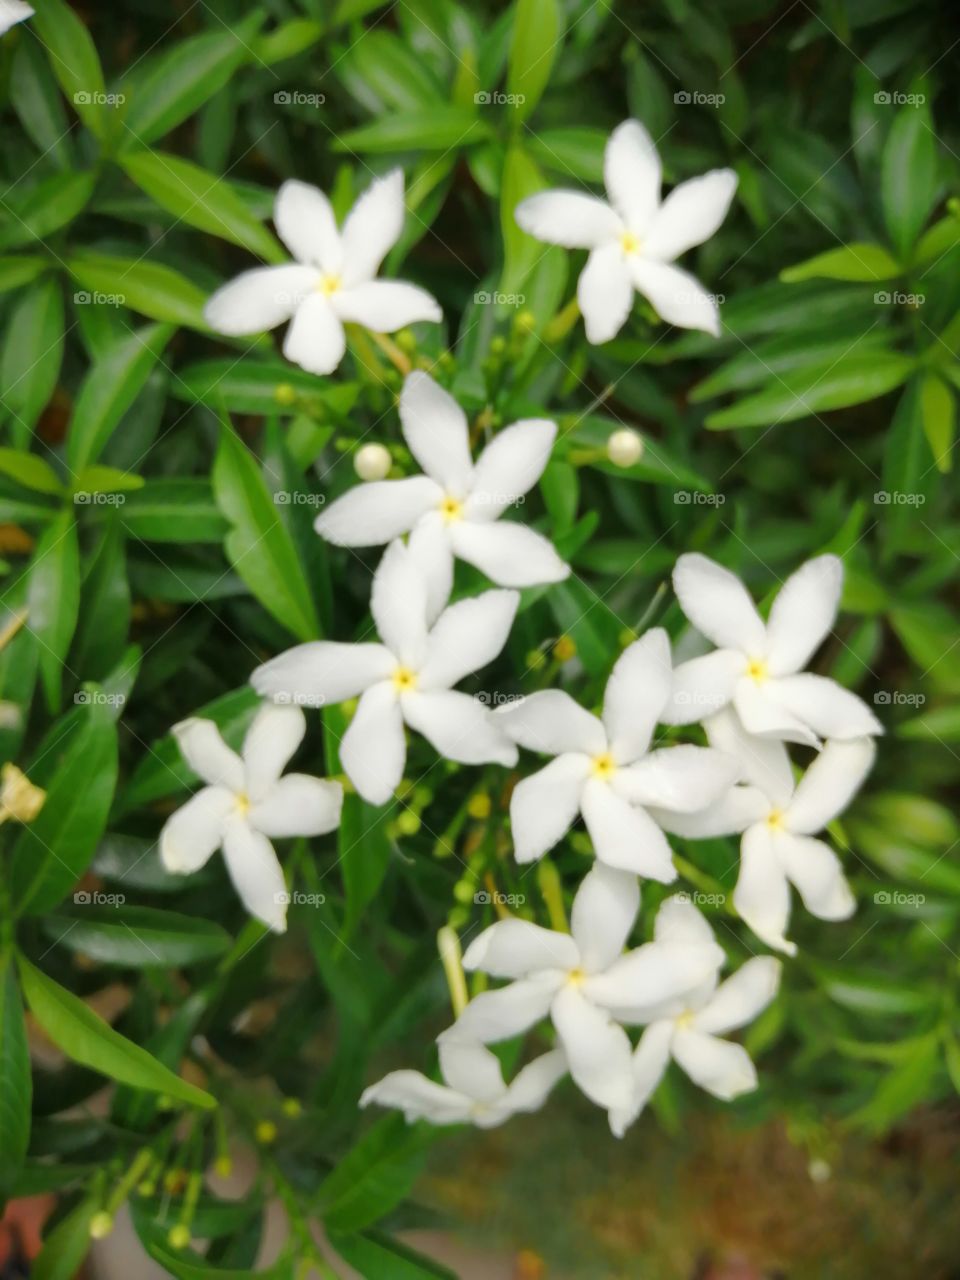 The beautiful white flowers.